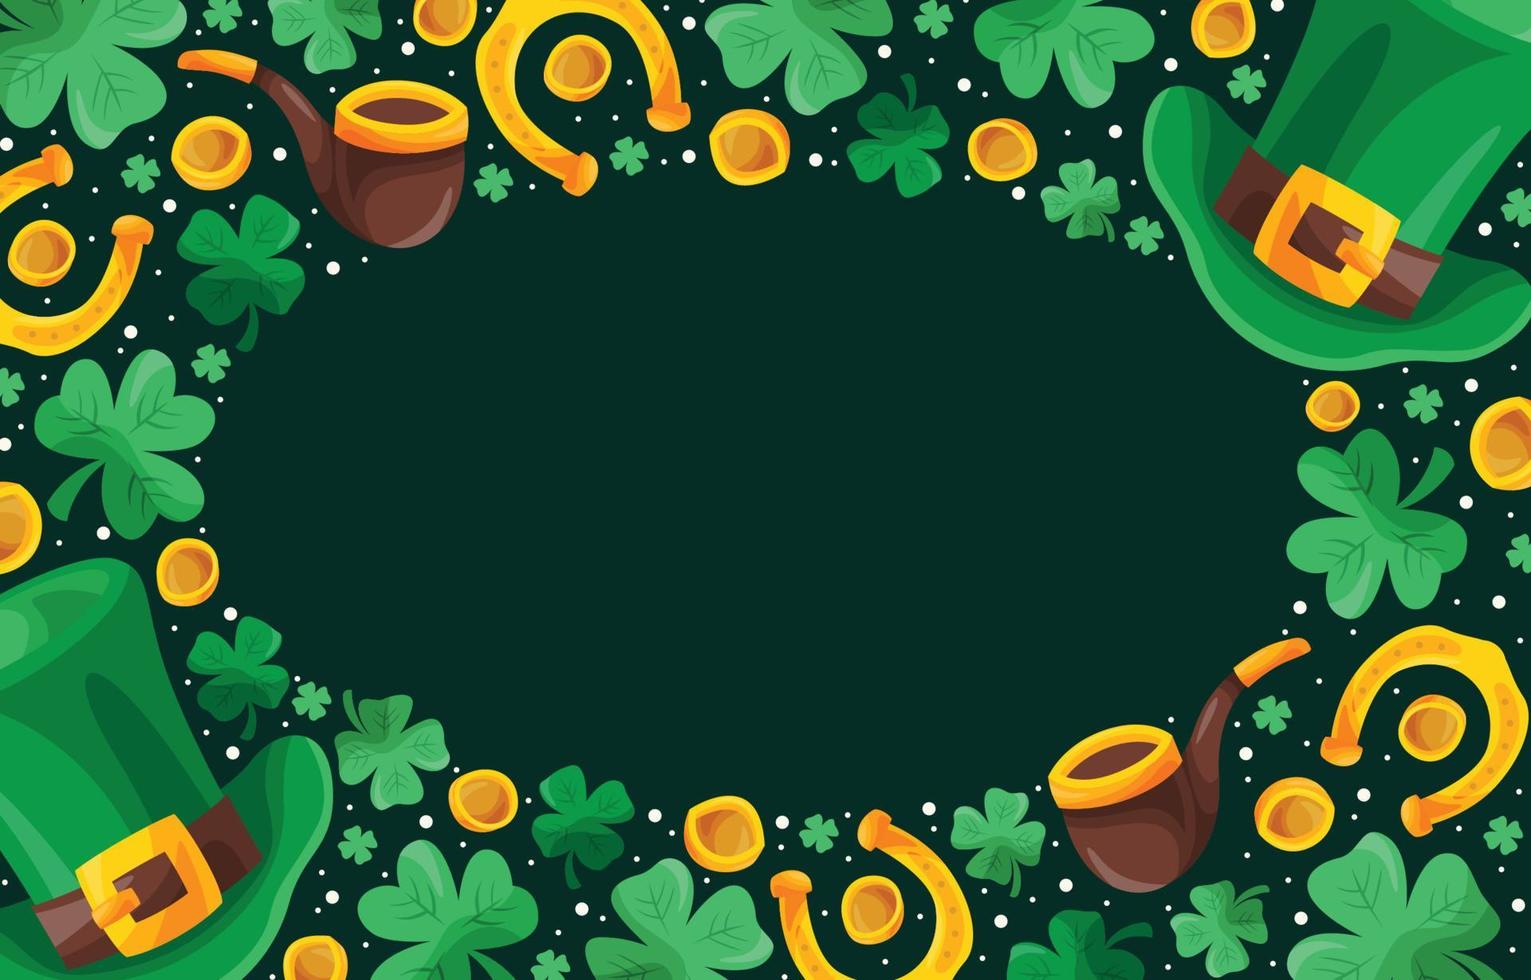 St Patrick's Day Shamrock Doodle Element Background vector